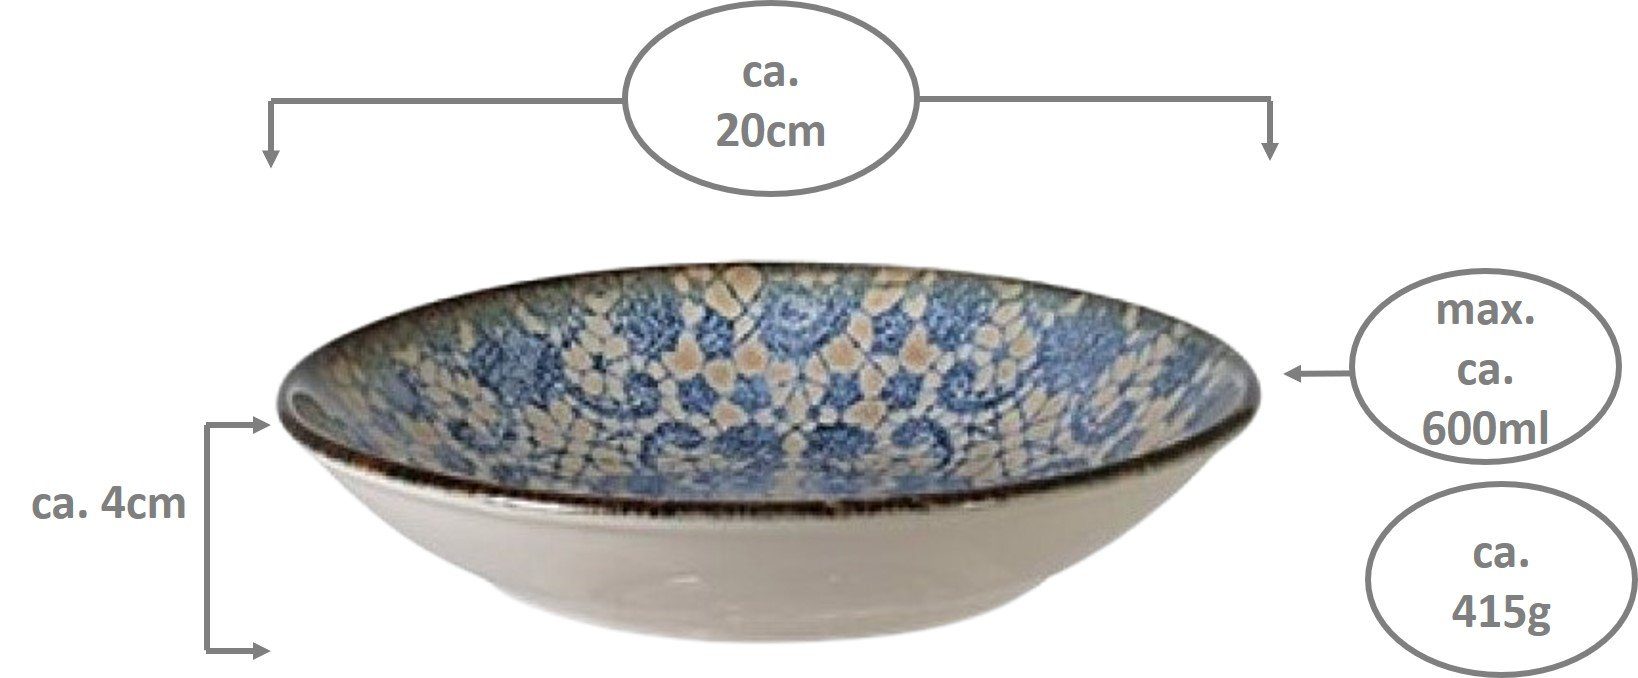 Porzellan, Emilja - Suppenteller besonders tief Teller 1 stoßfest 20cm Valencia Stück